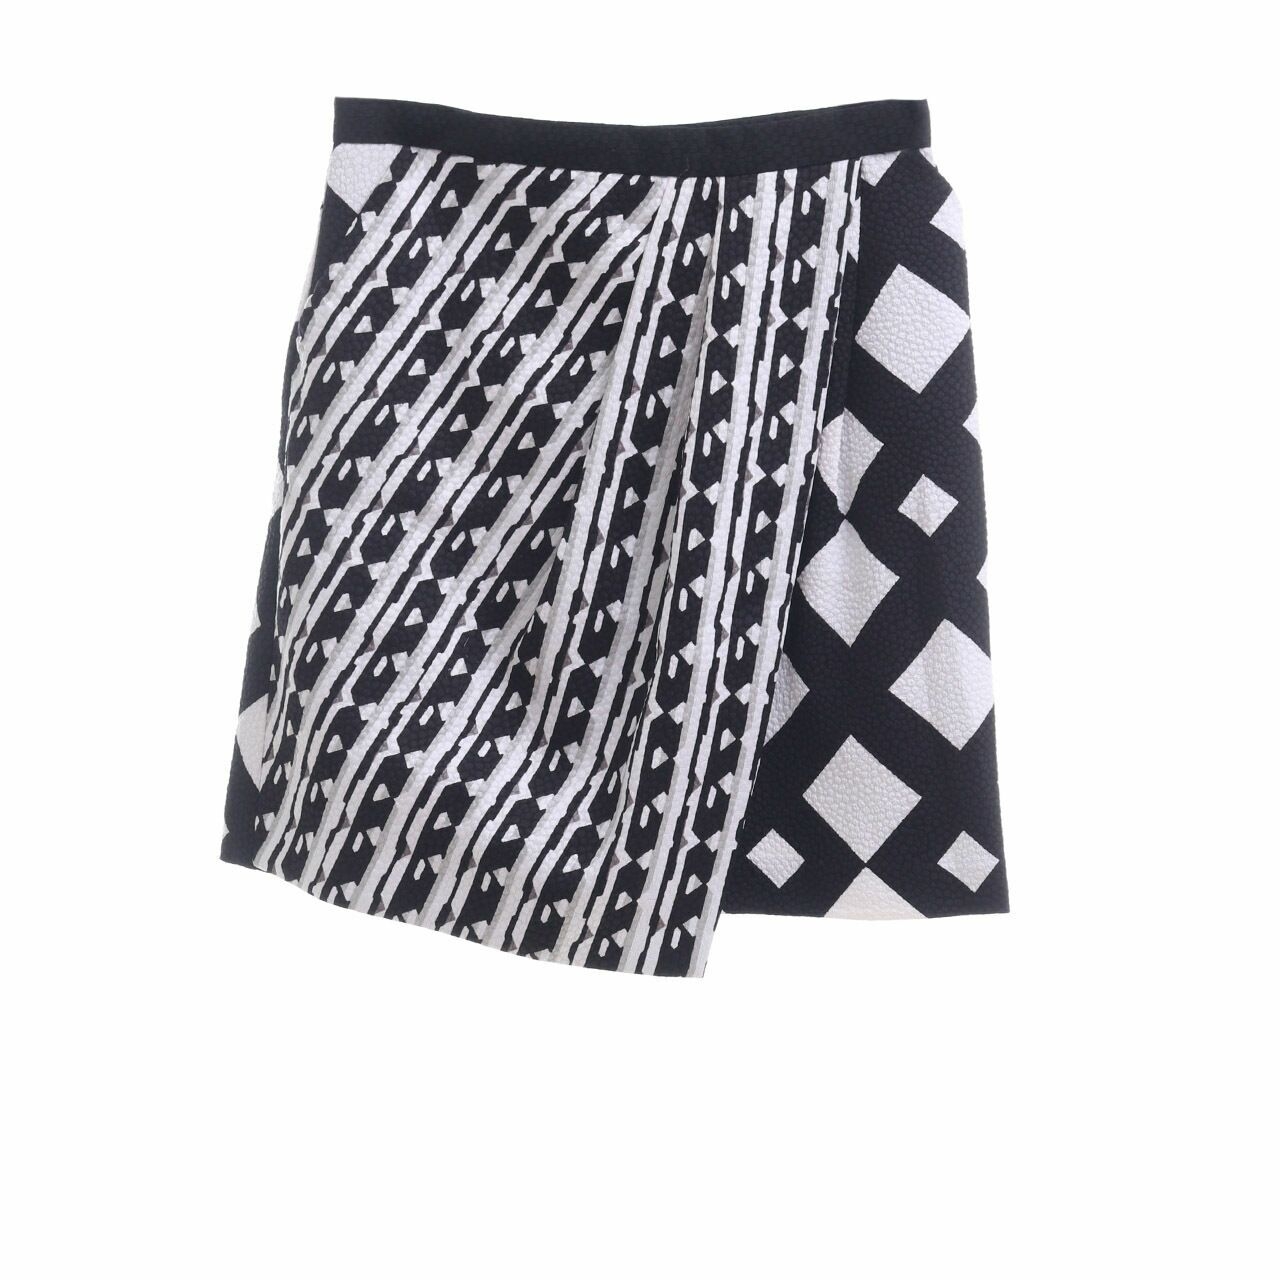 Peter Pilotto Black & White Mini Skirt